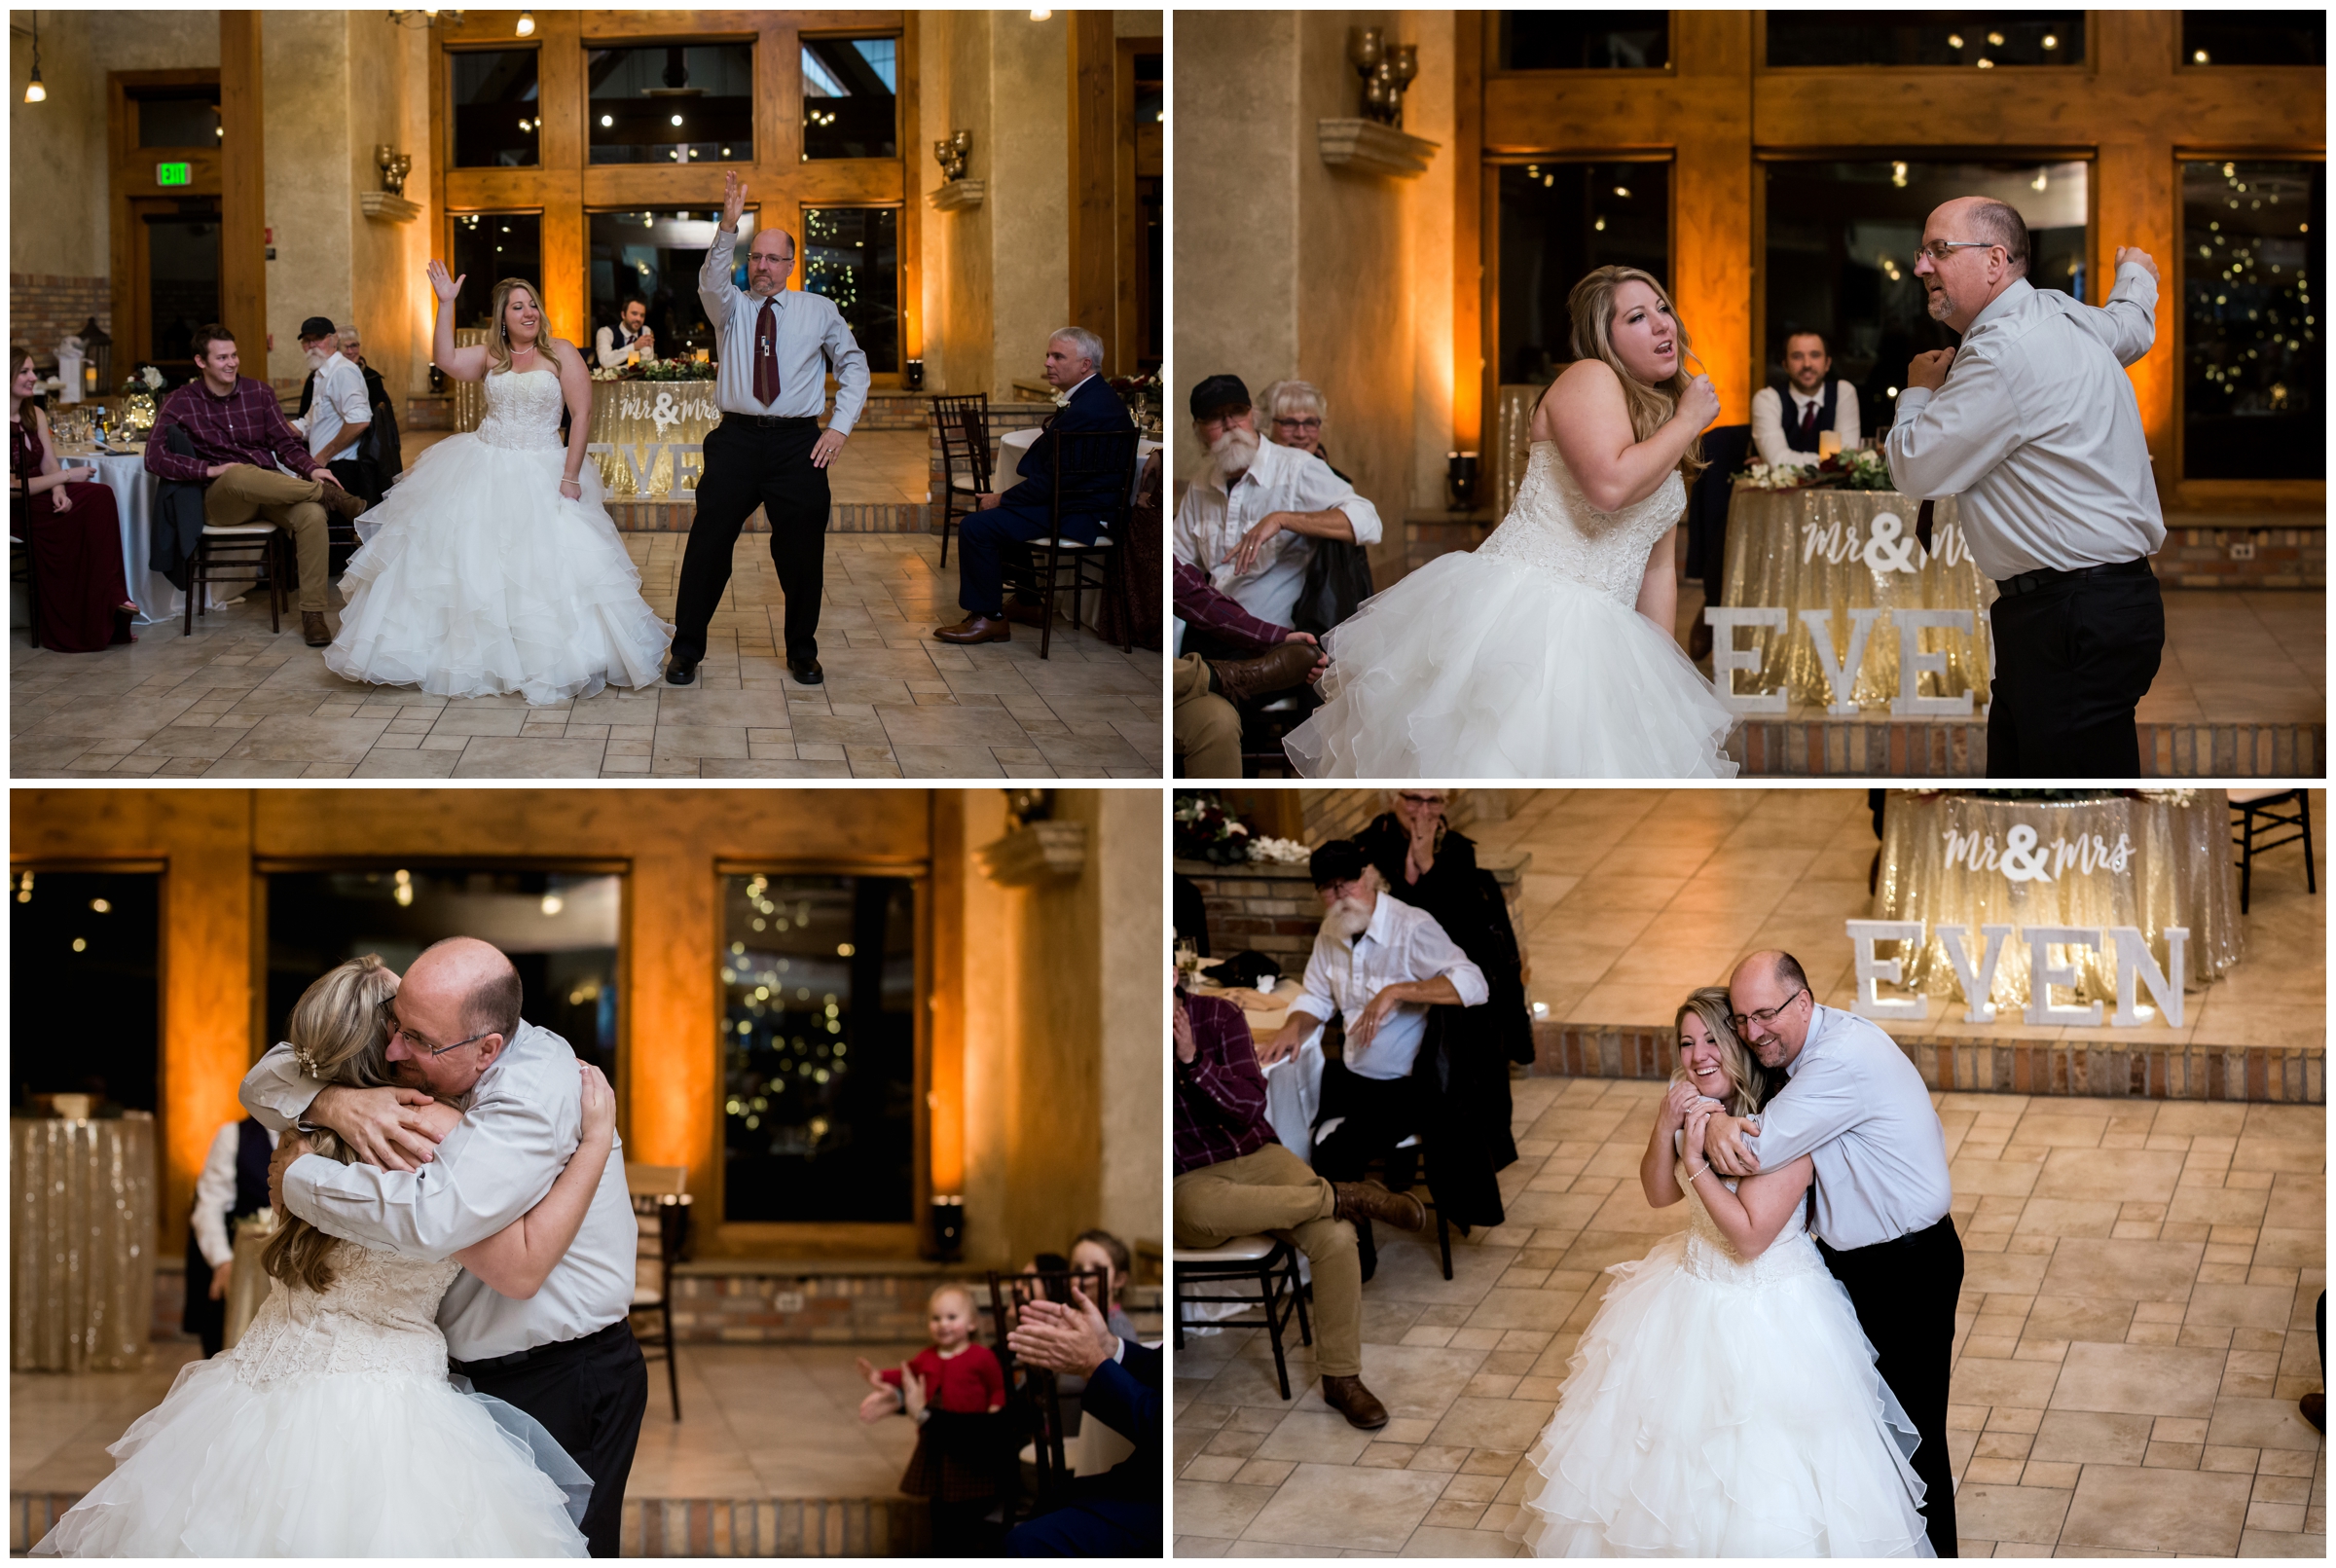 choreographed father-daughter dance at Estes Park wedding reception 